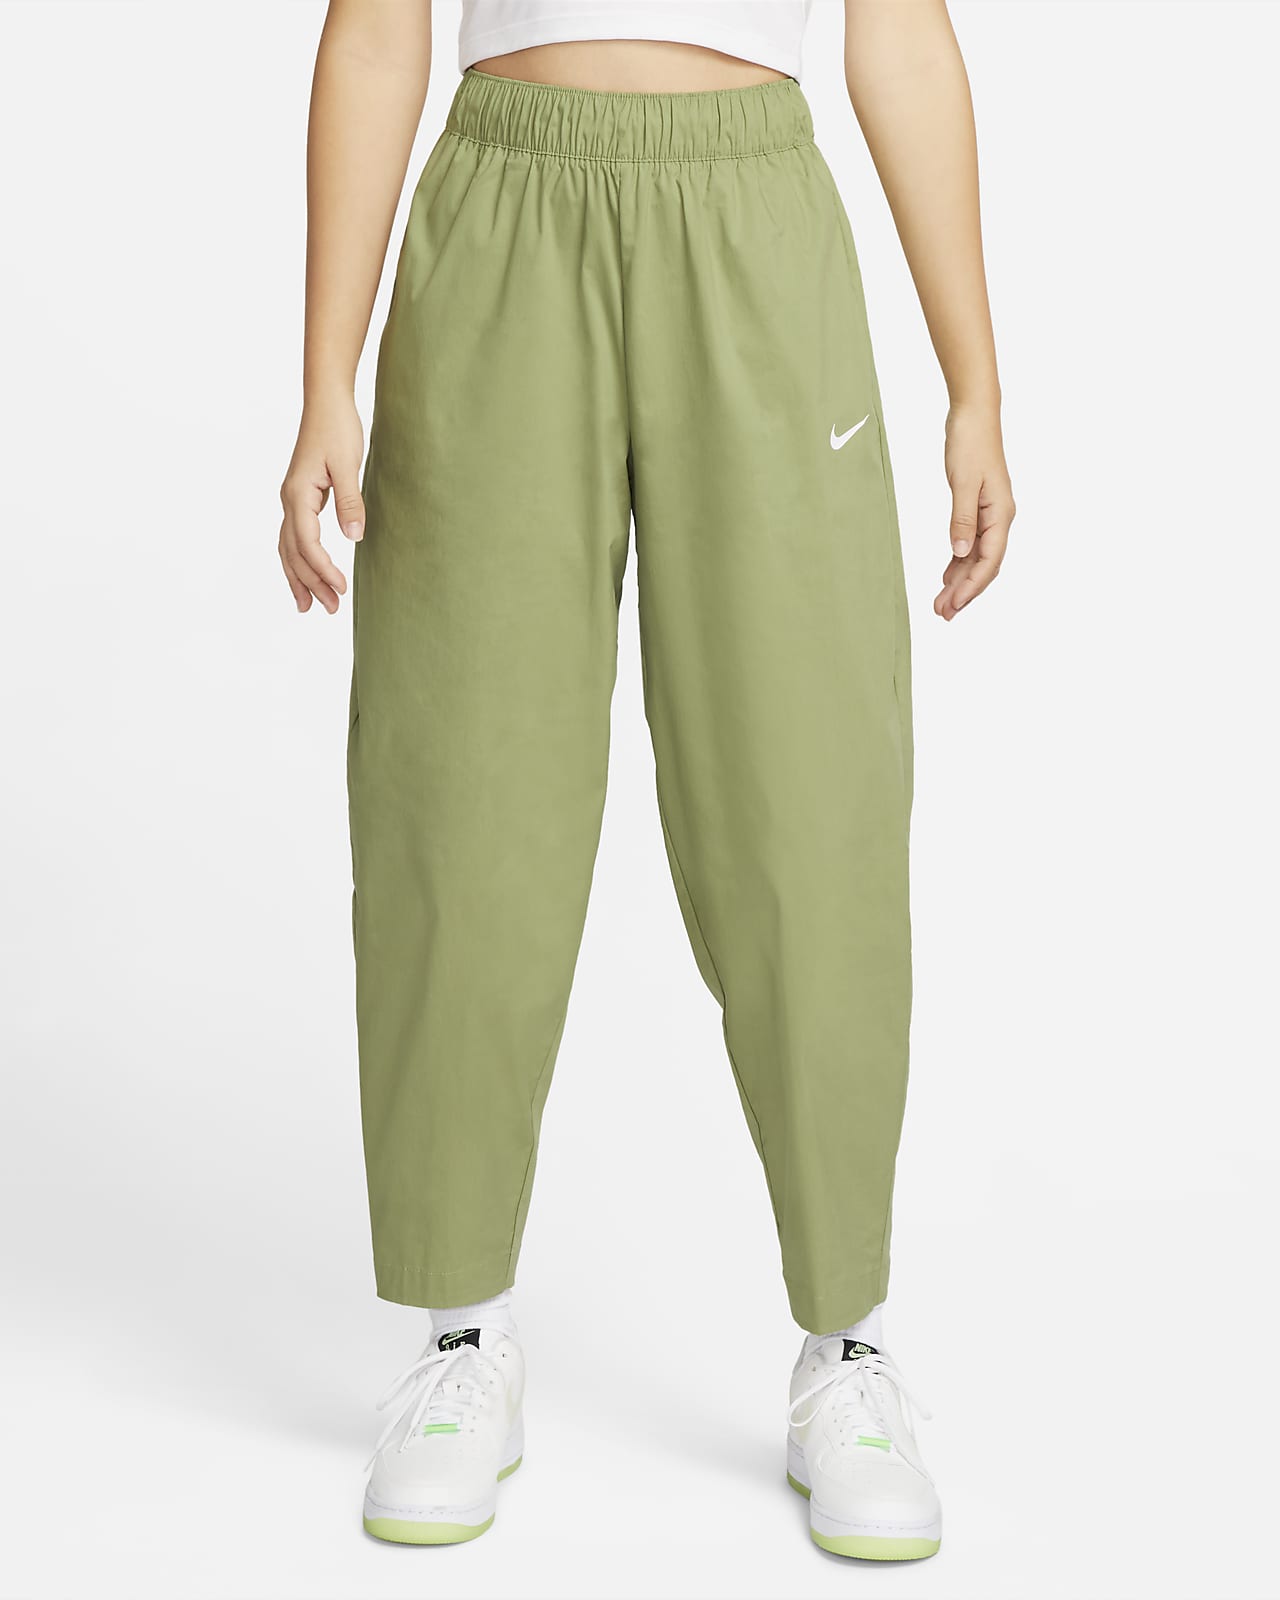 Pants con curvas de tiro alto mujer Nike Sportswear Nike.com